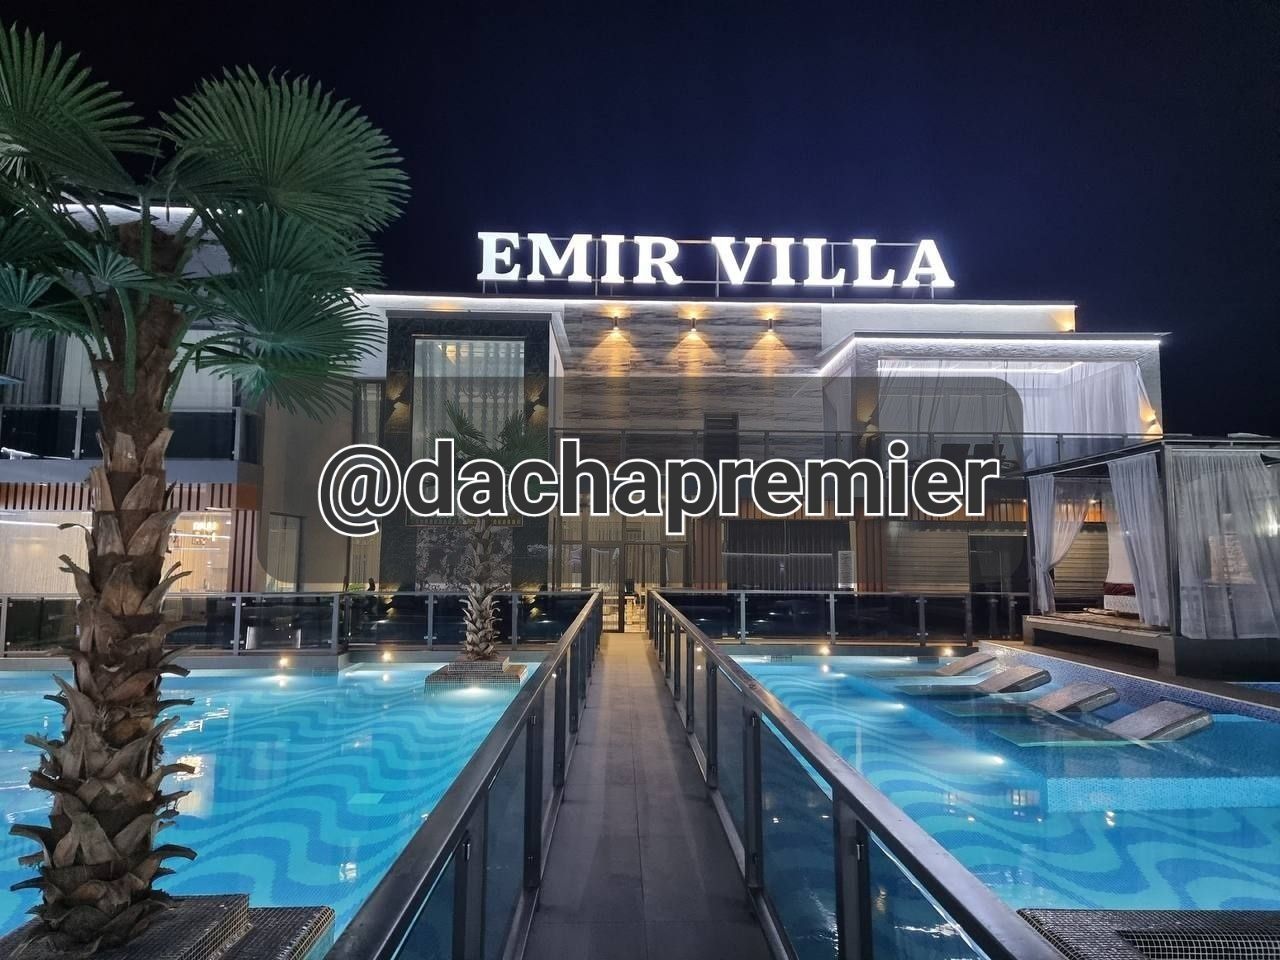 Emir villa Hitech 20 person